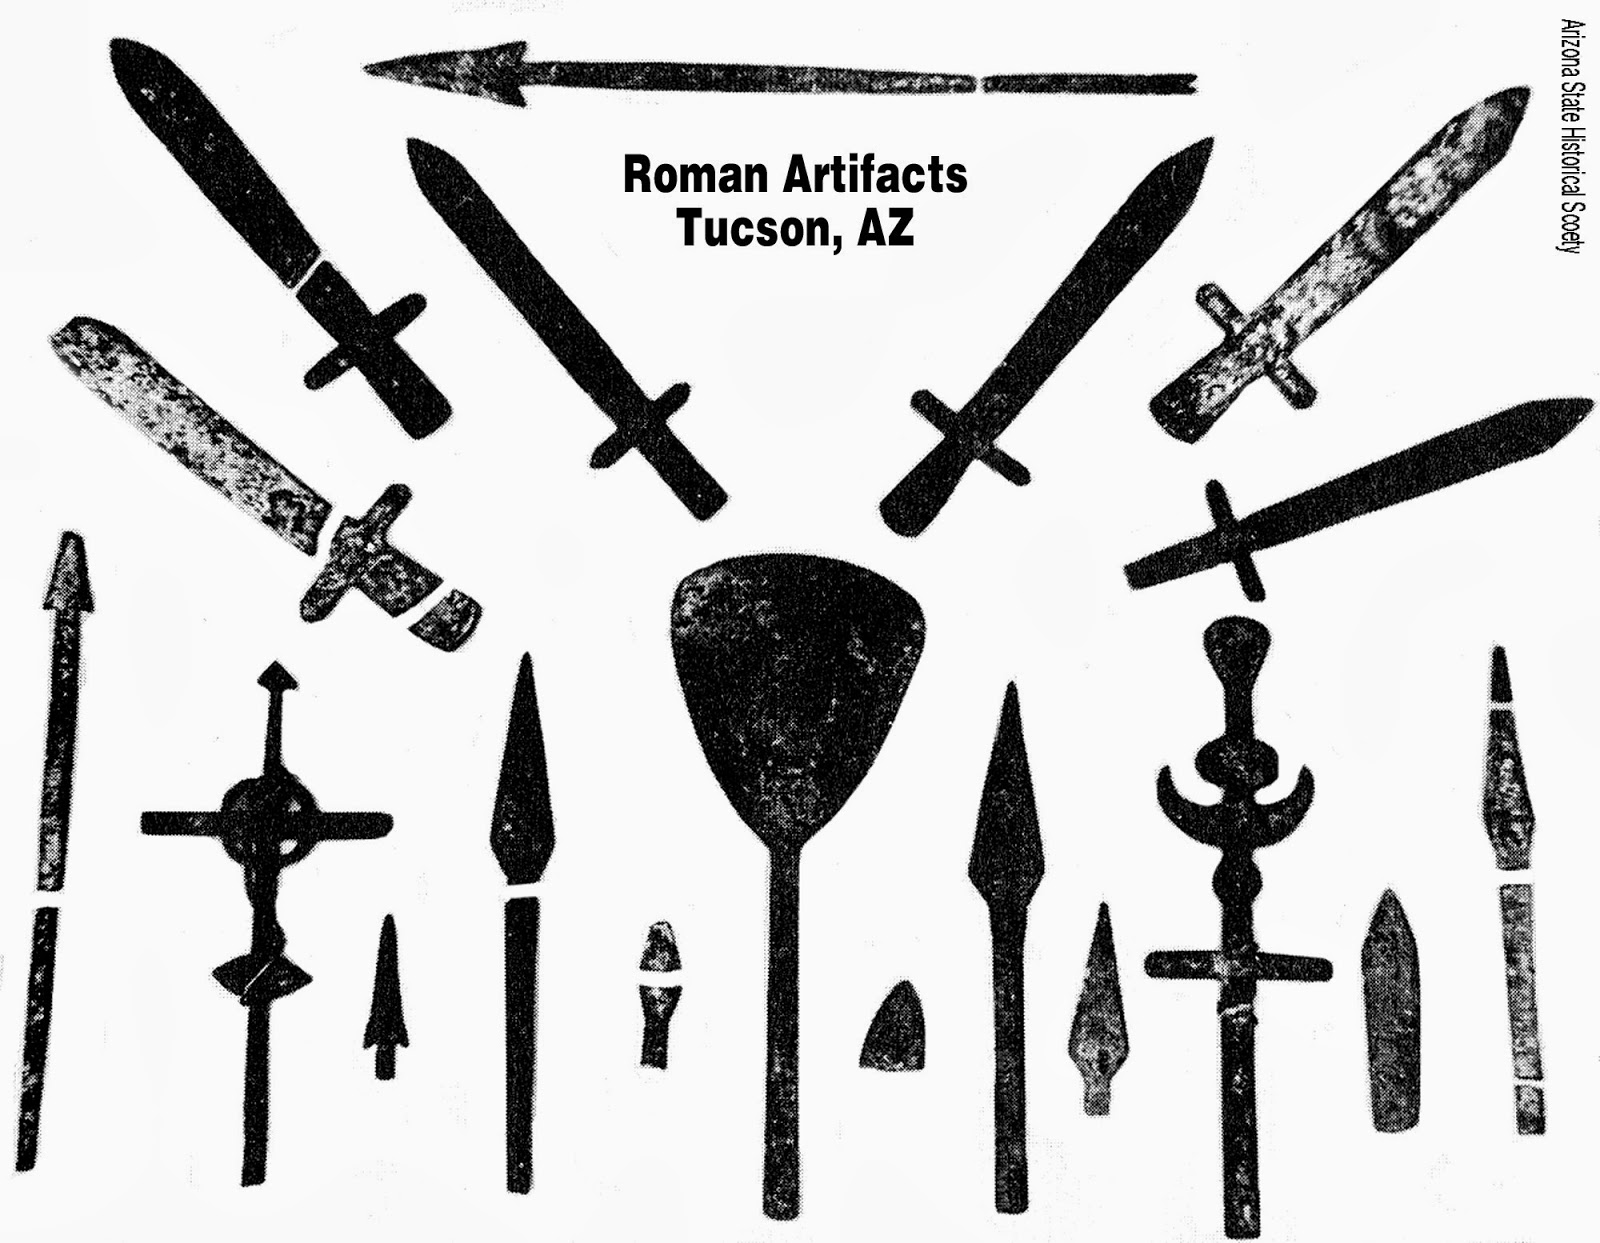 Phoenician Indians - Artifacts tucson